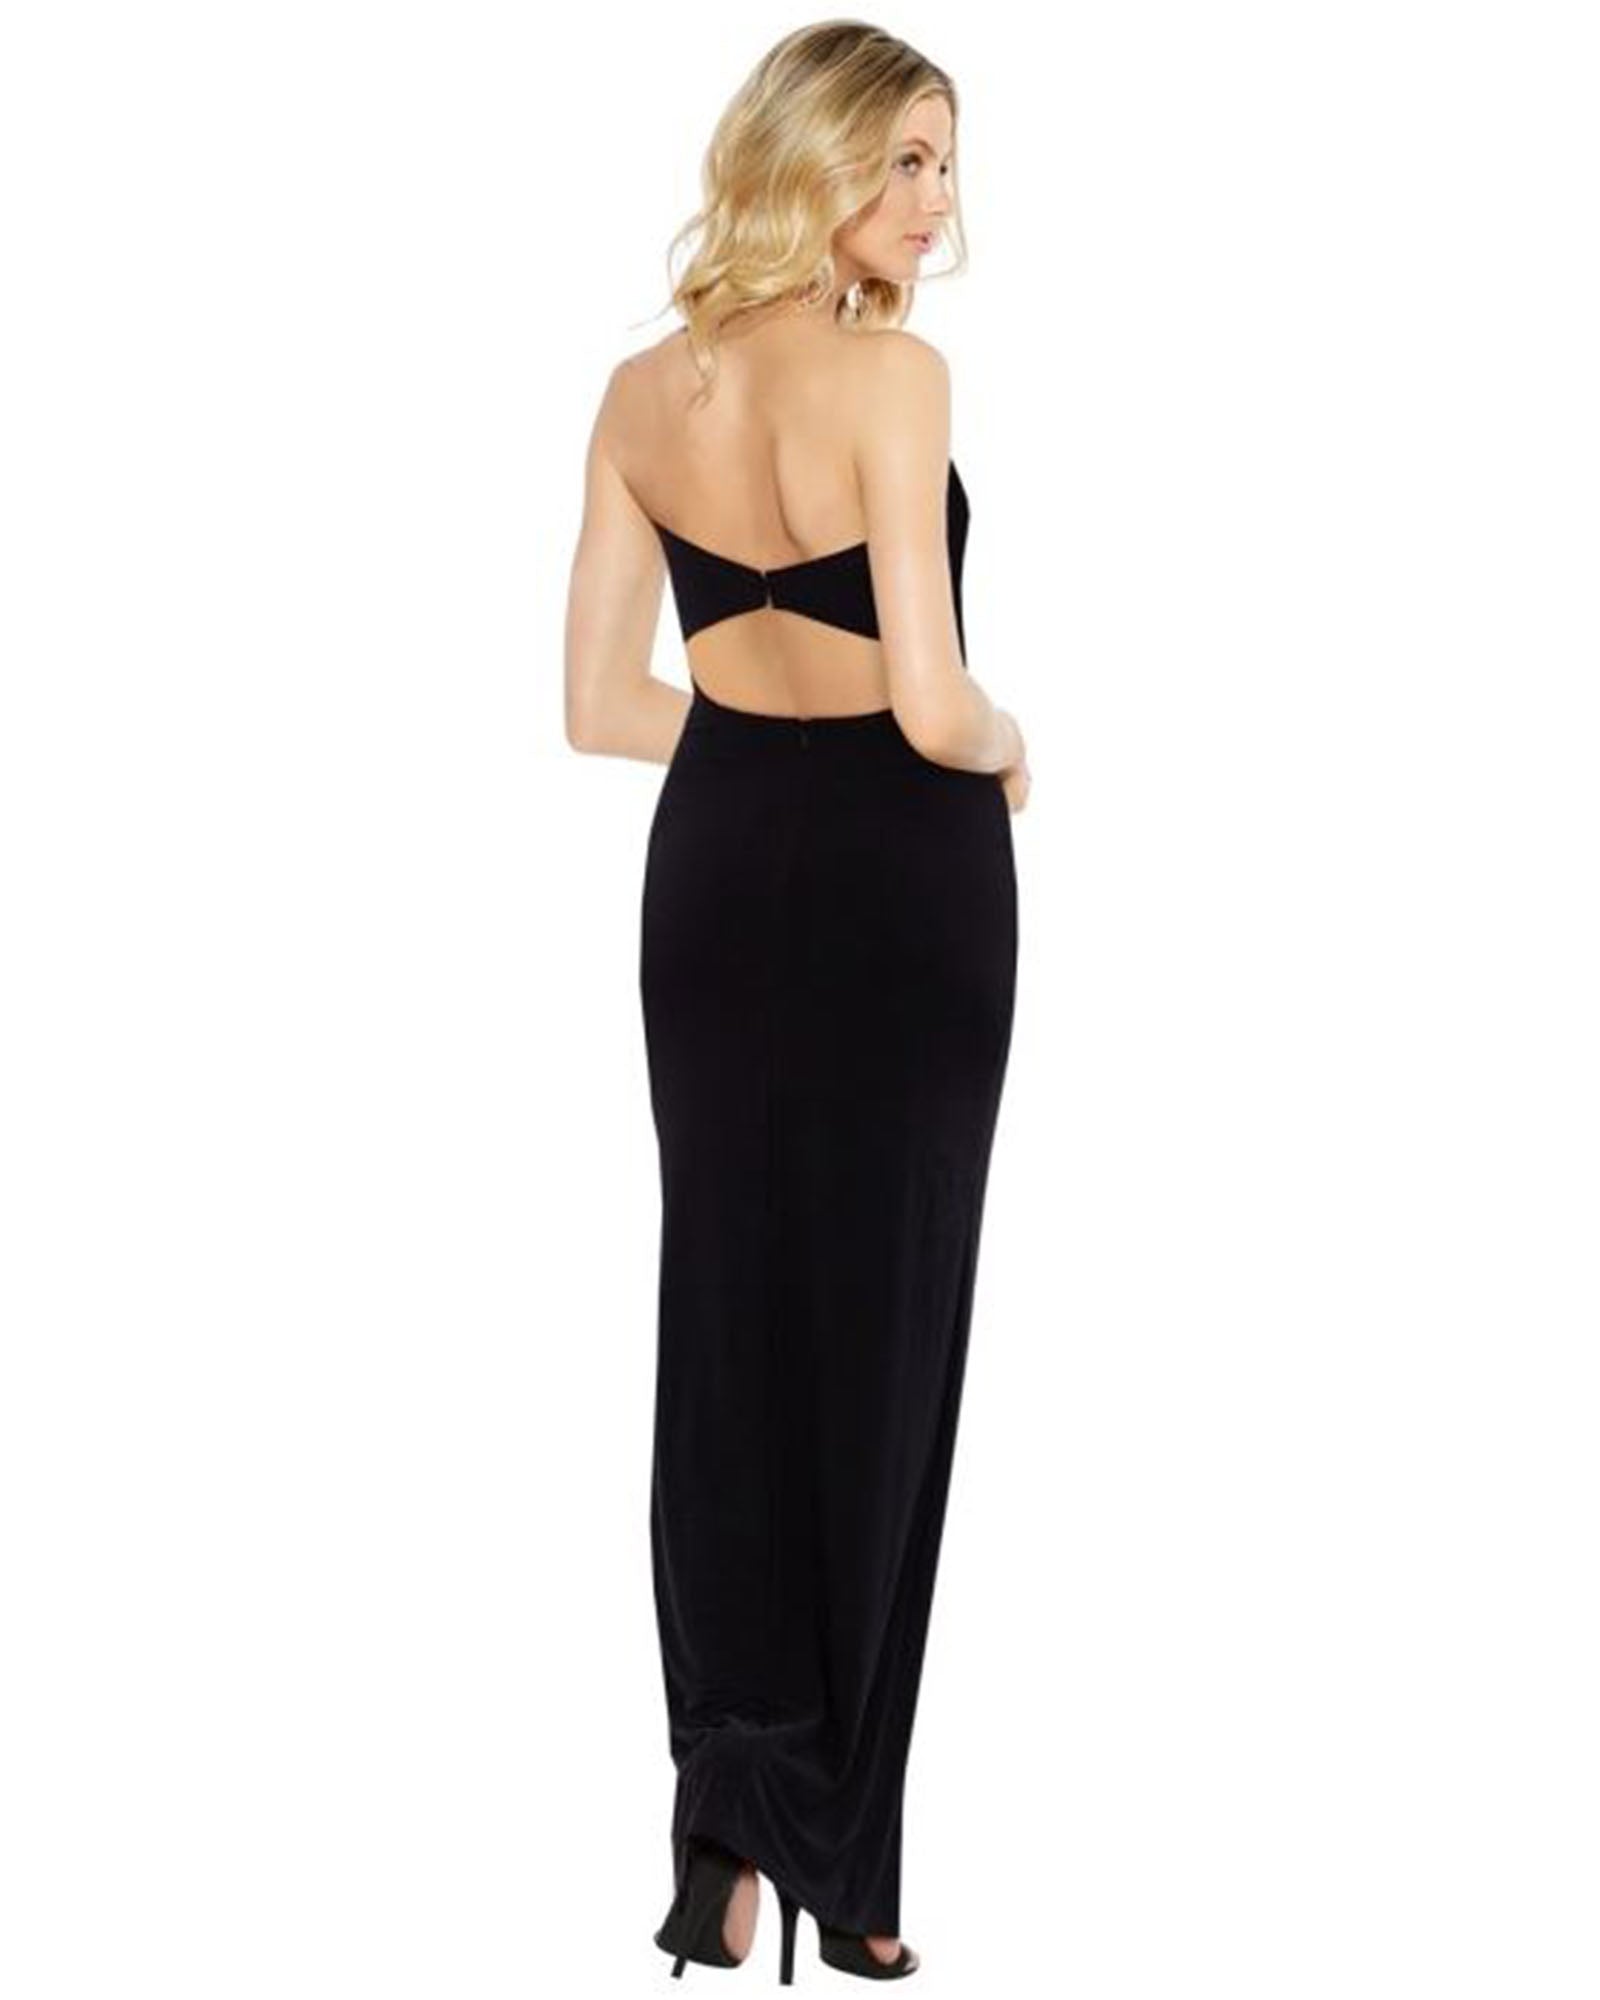 SKIVA strapless evening dress long black split gown open back sheath stretch fabric